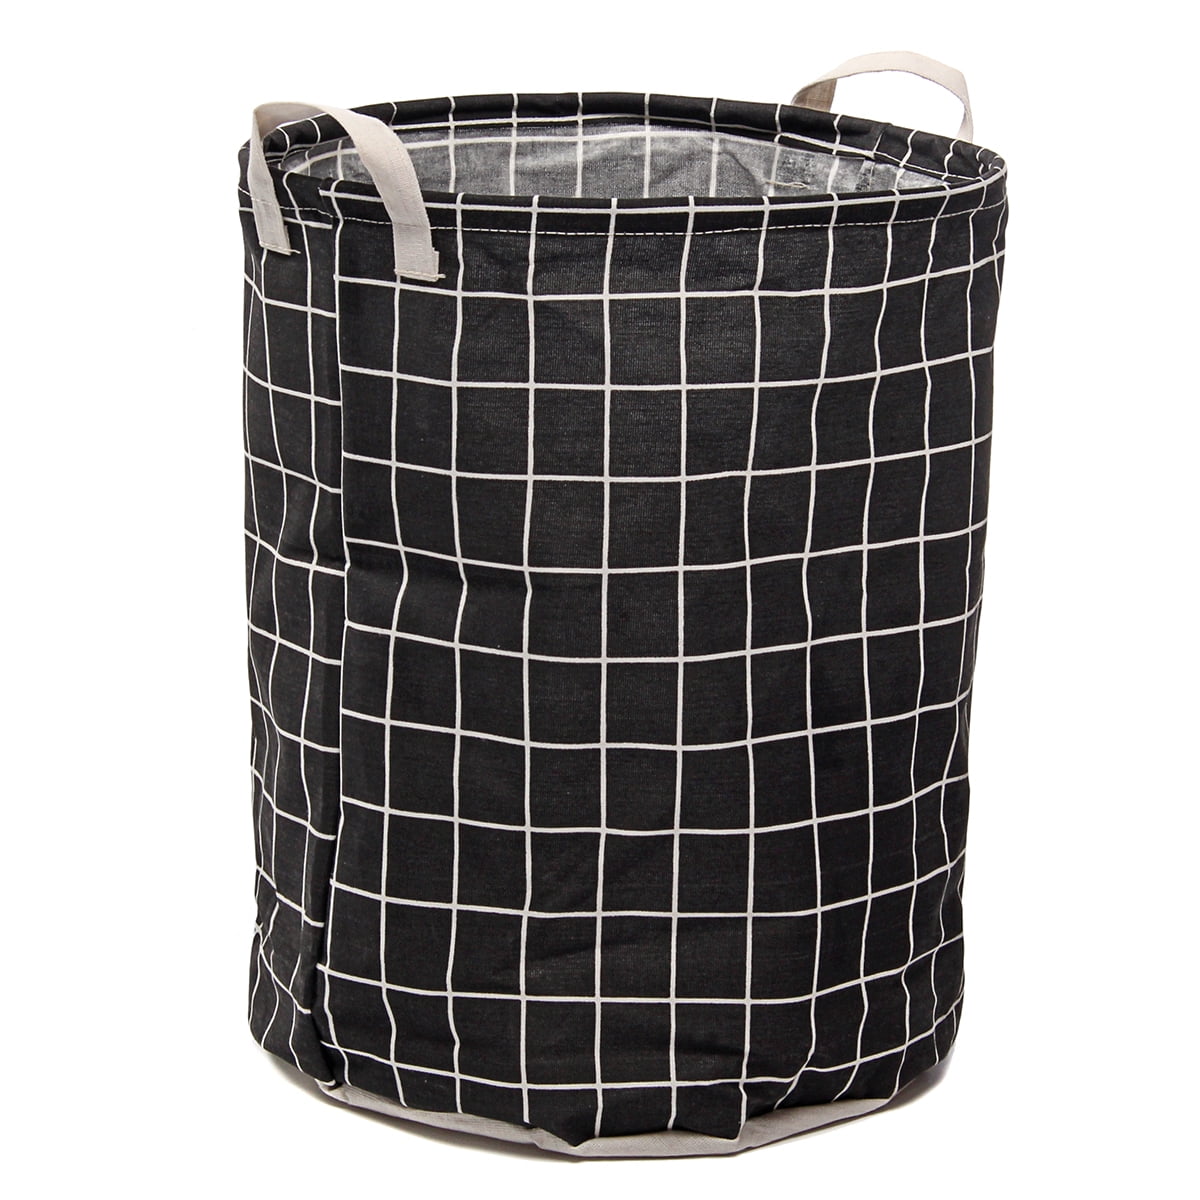 Home Foldable Laundry Hamper Clothes Storage Basket Bin Organizer Washing Basket 